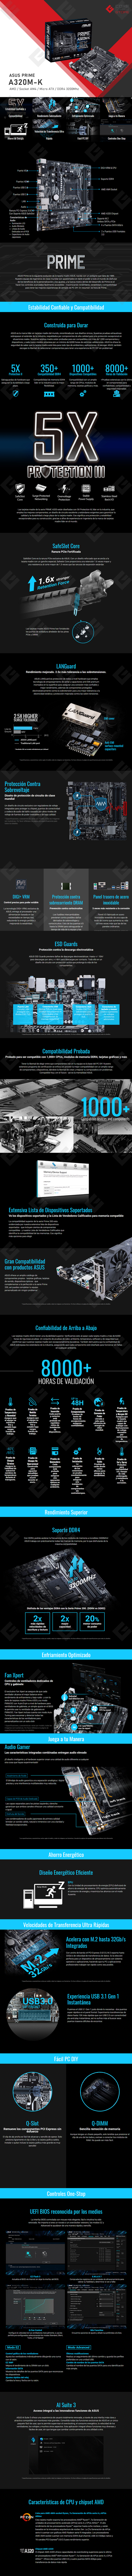 Tarjeta Madre Asus Prime A320M-K, Micro ATX, AM4, DDR4 3200Mhz, M.2